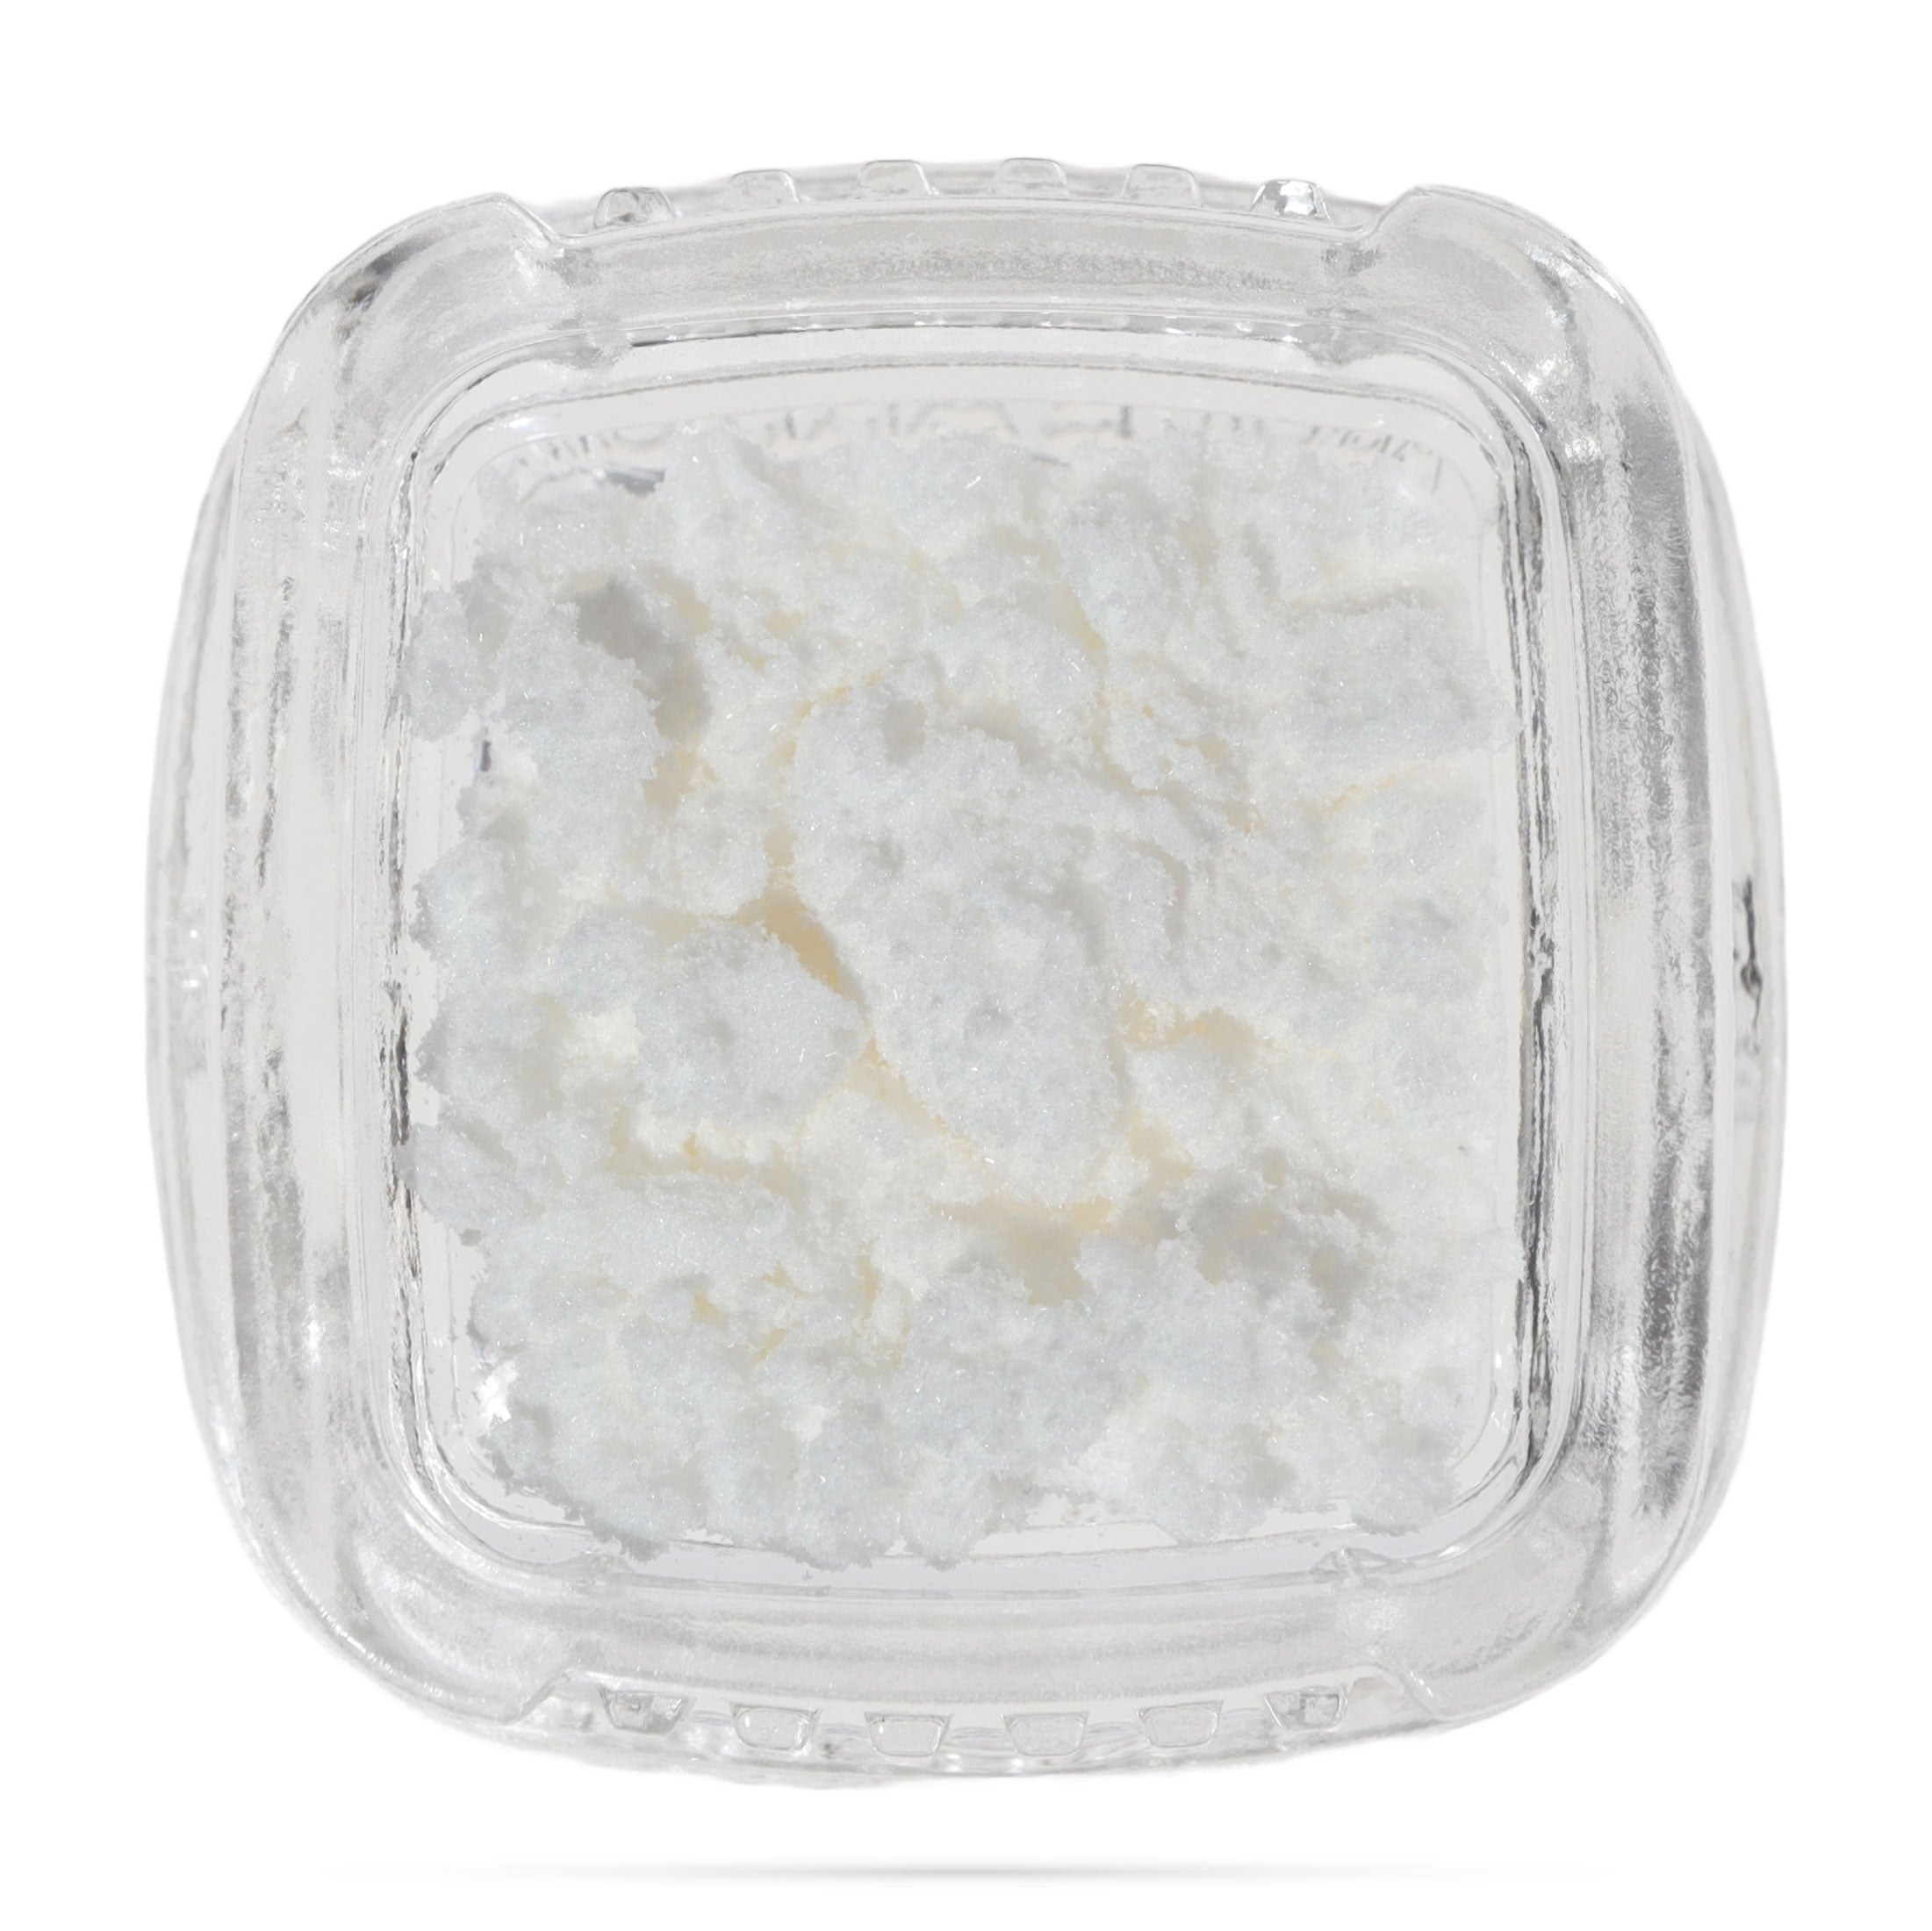 Image of 1 Gram CBD Isolate jar.